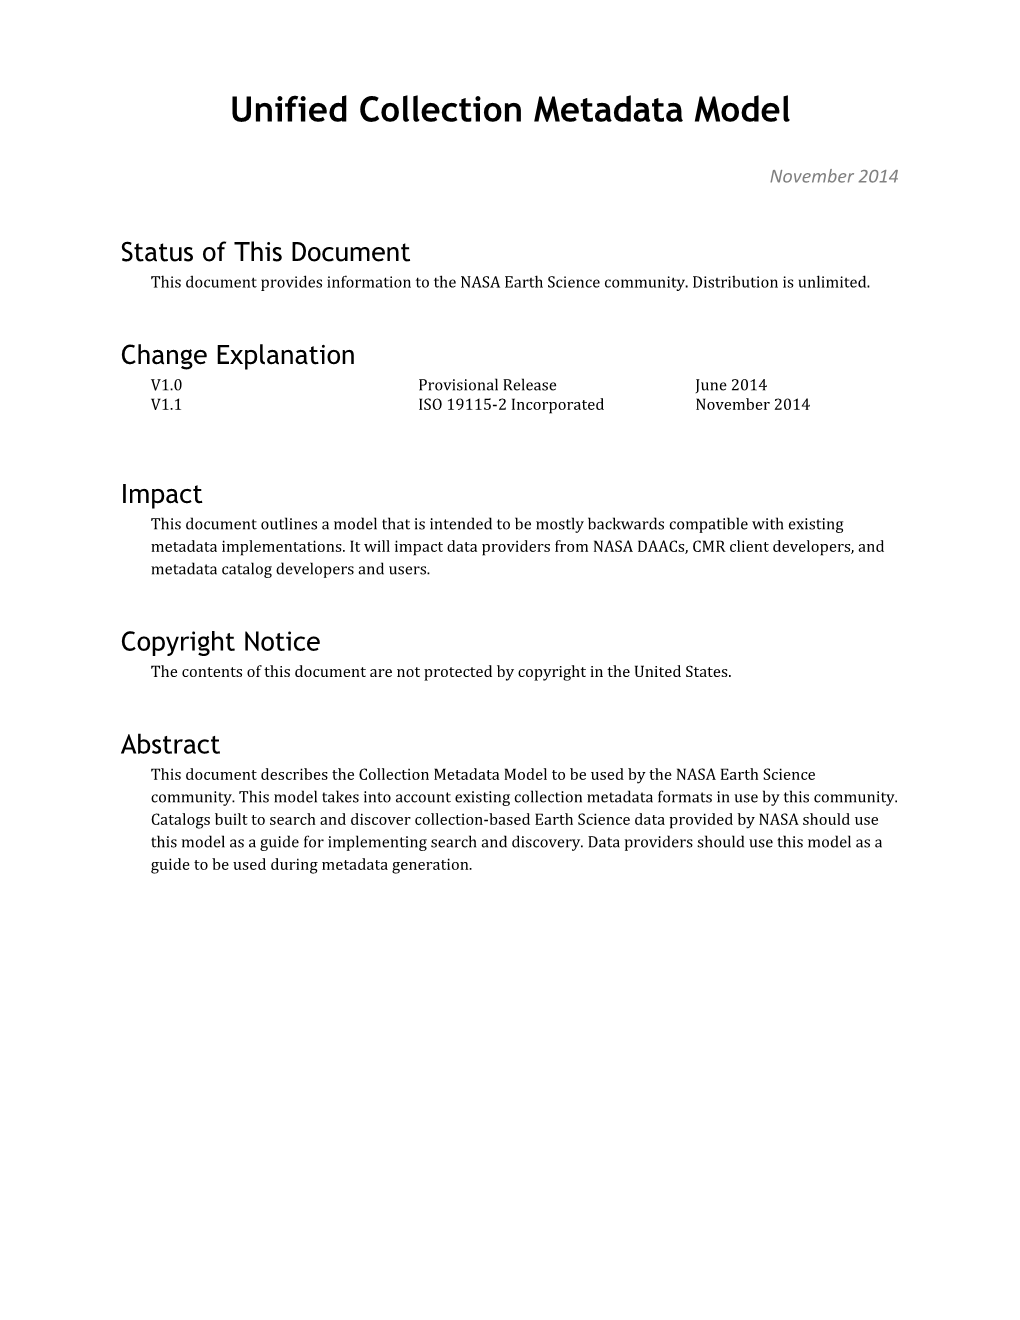 UMM-C Document - 11/8/14 Internal Draft